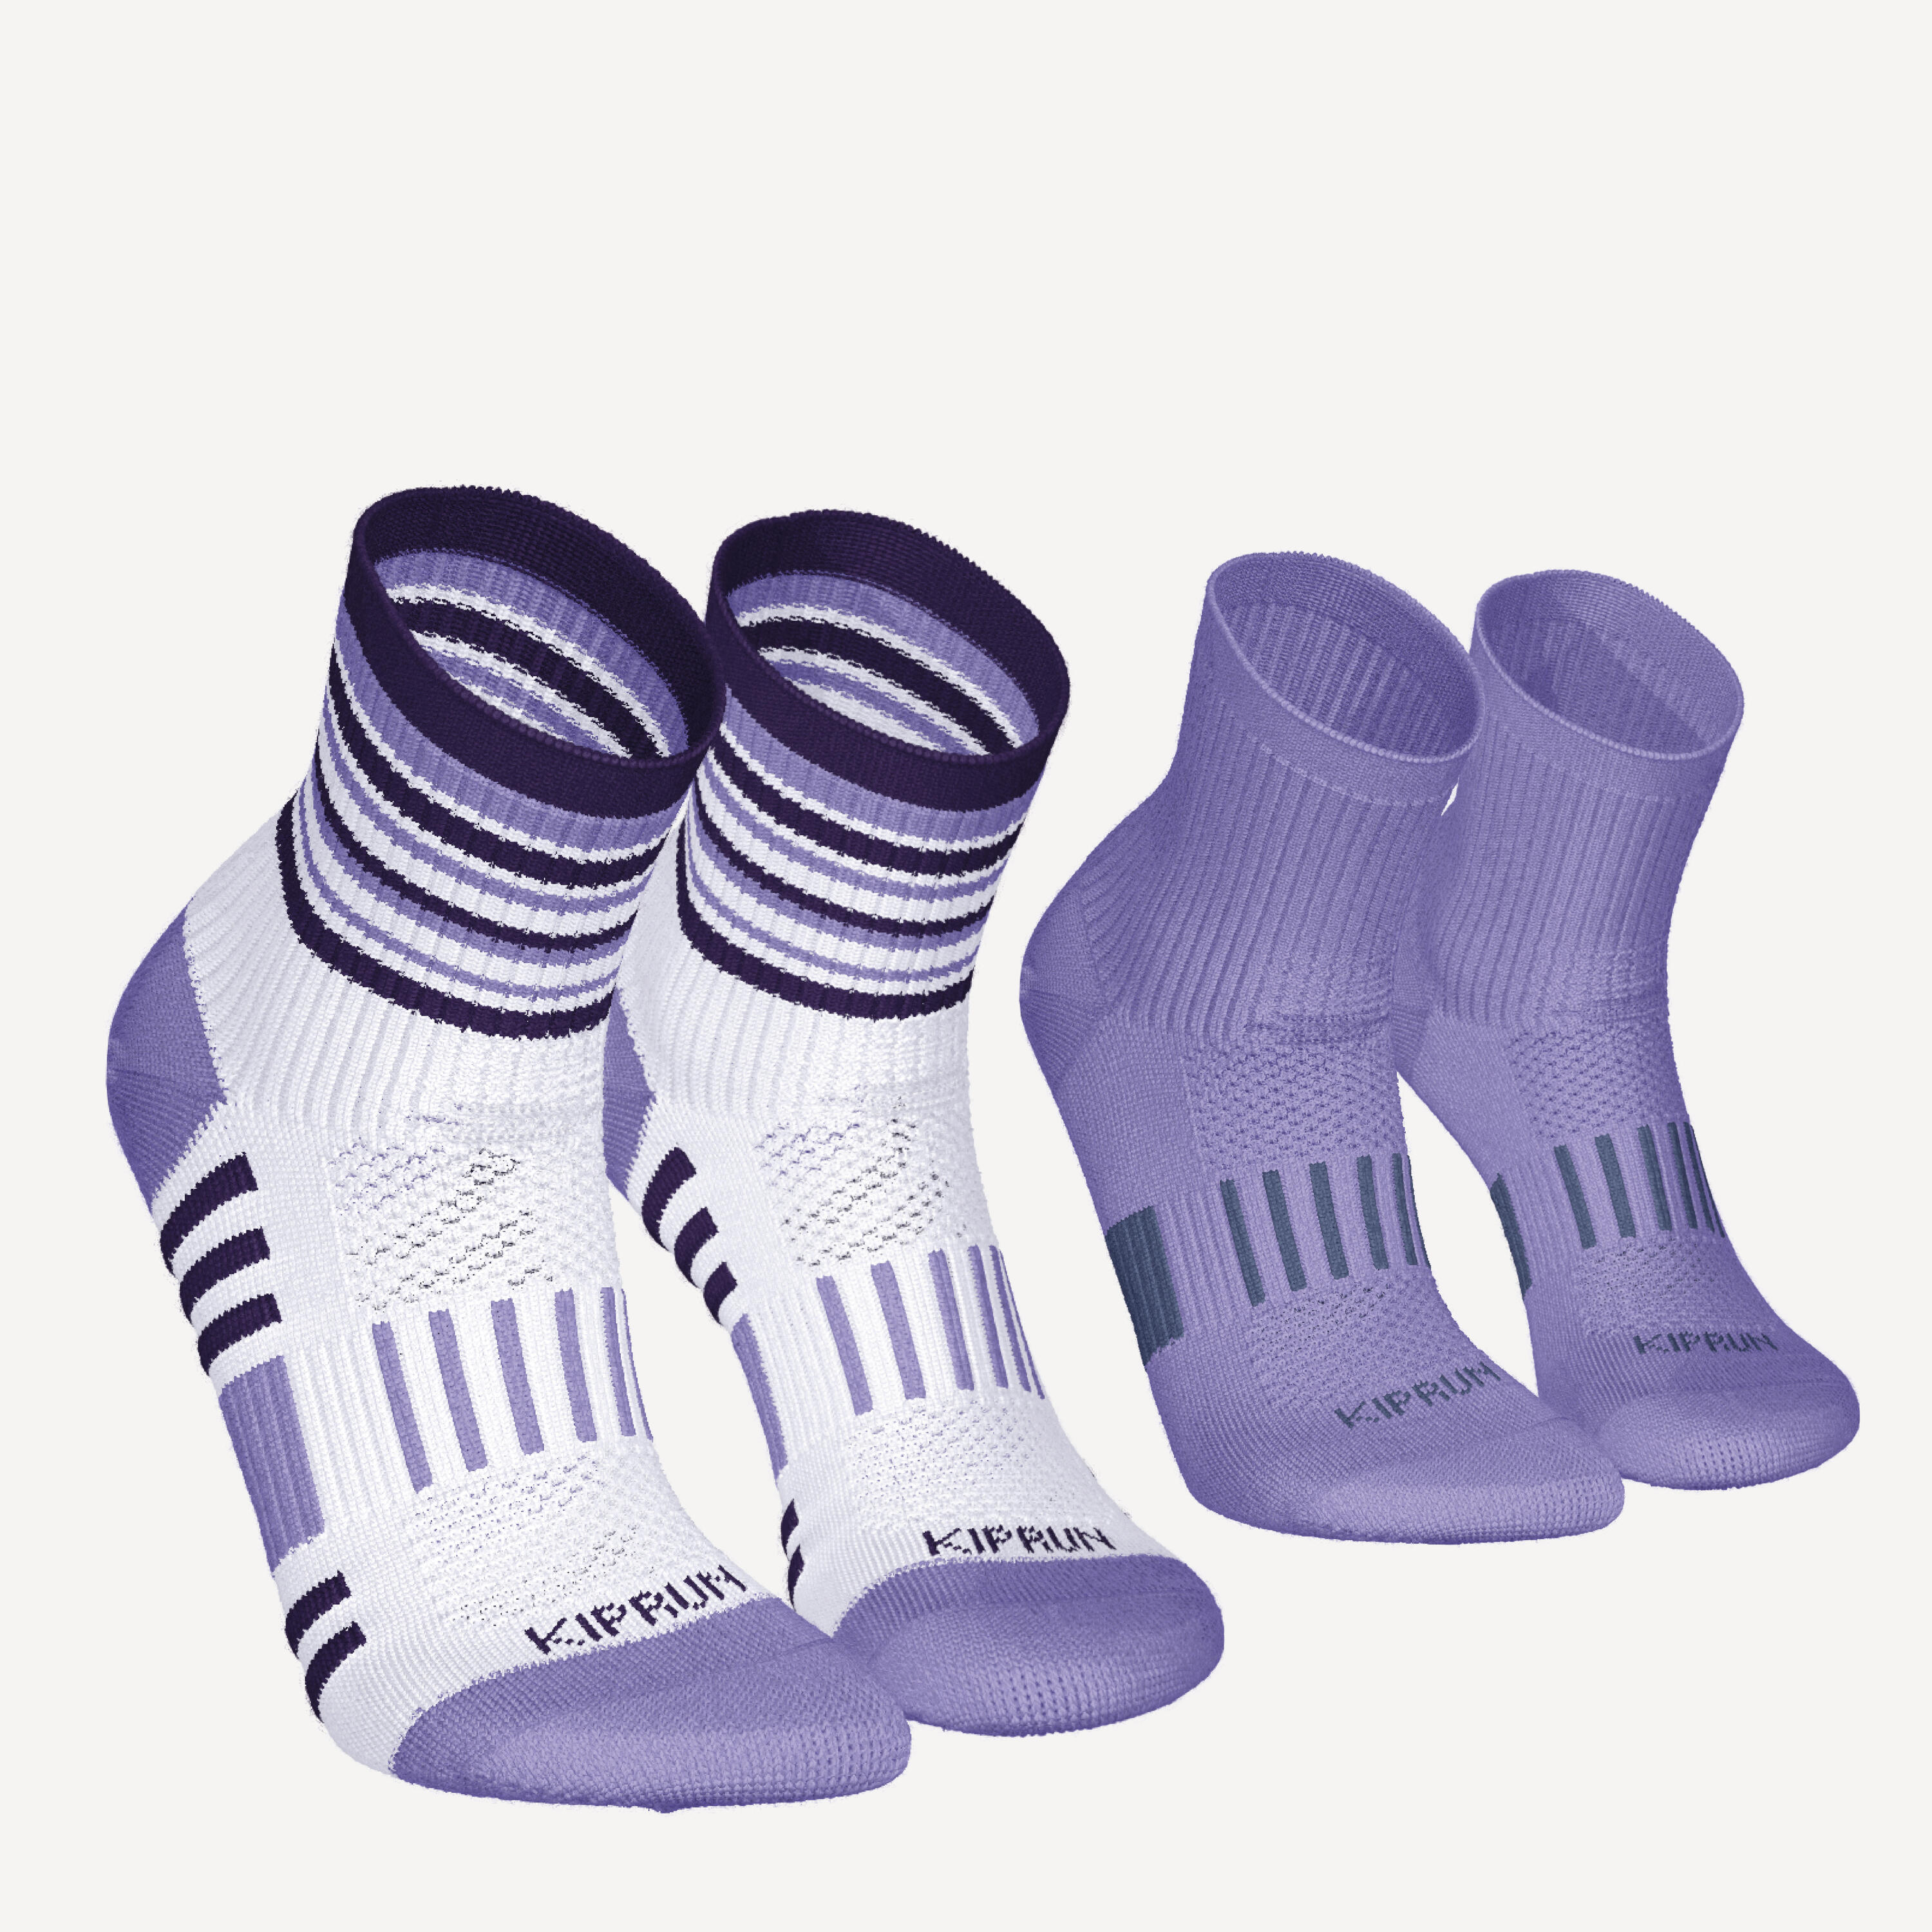 ultra white / lavender purple / deep purple